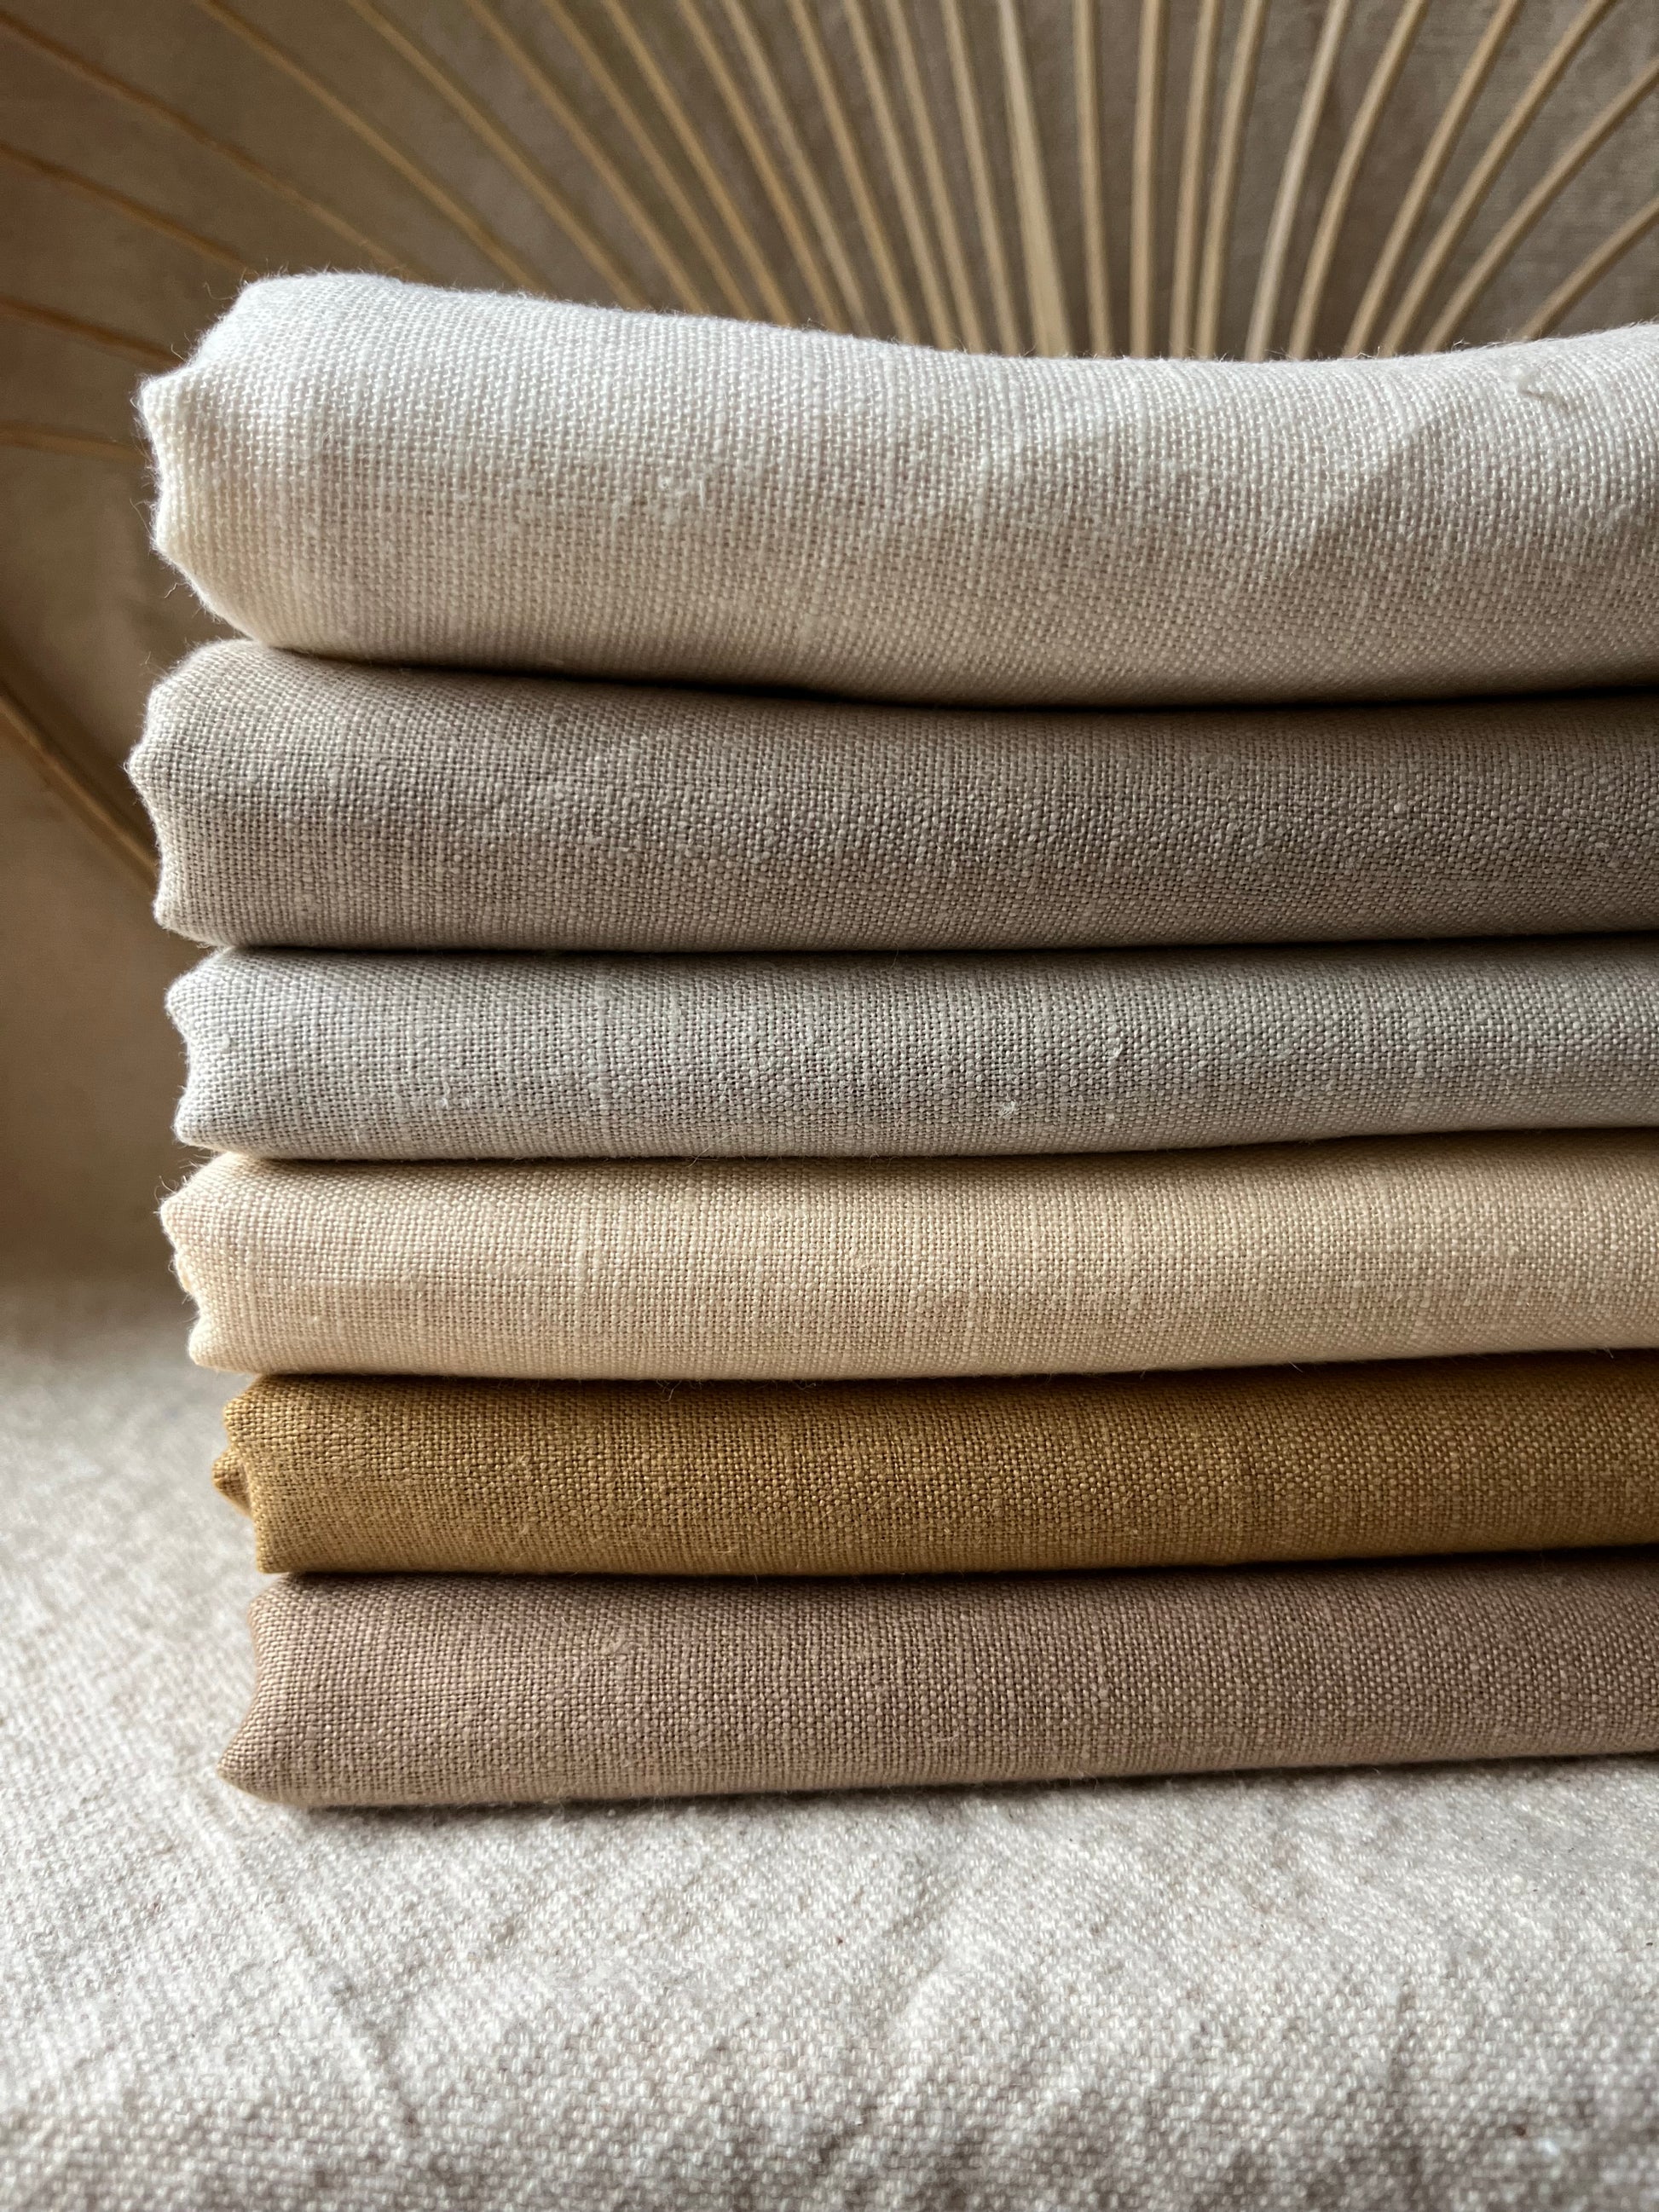 100% Stonewashed Linen Medium Weight Fabric by the Yard 7.2 oz